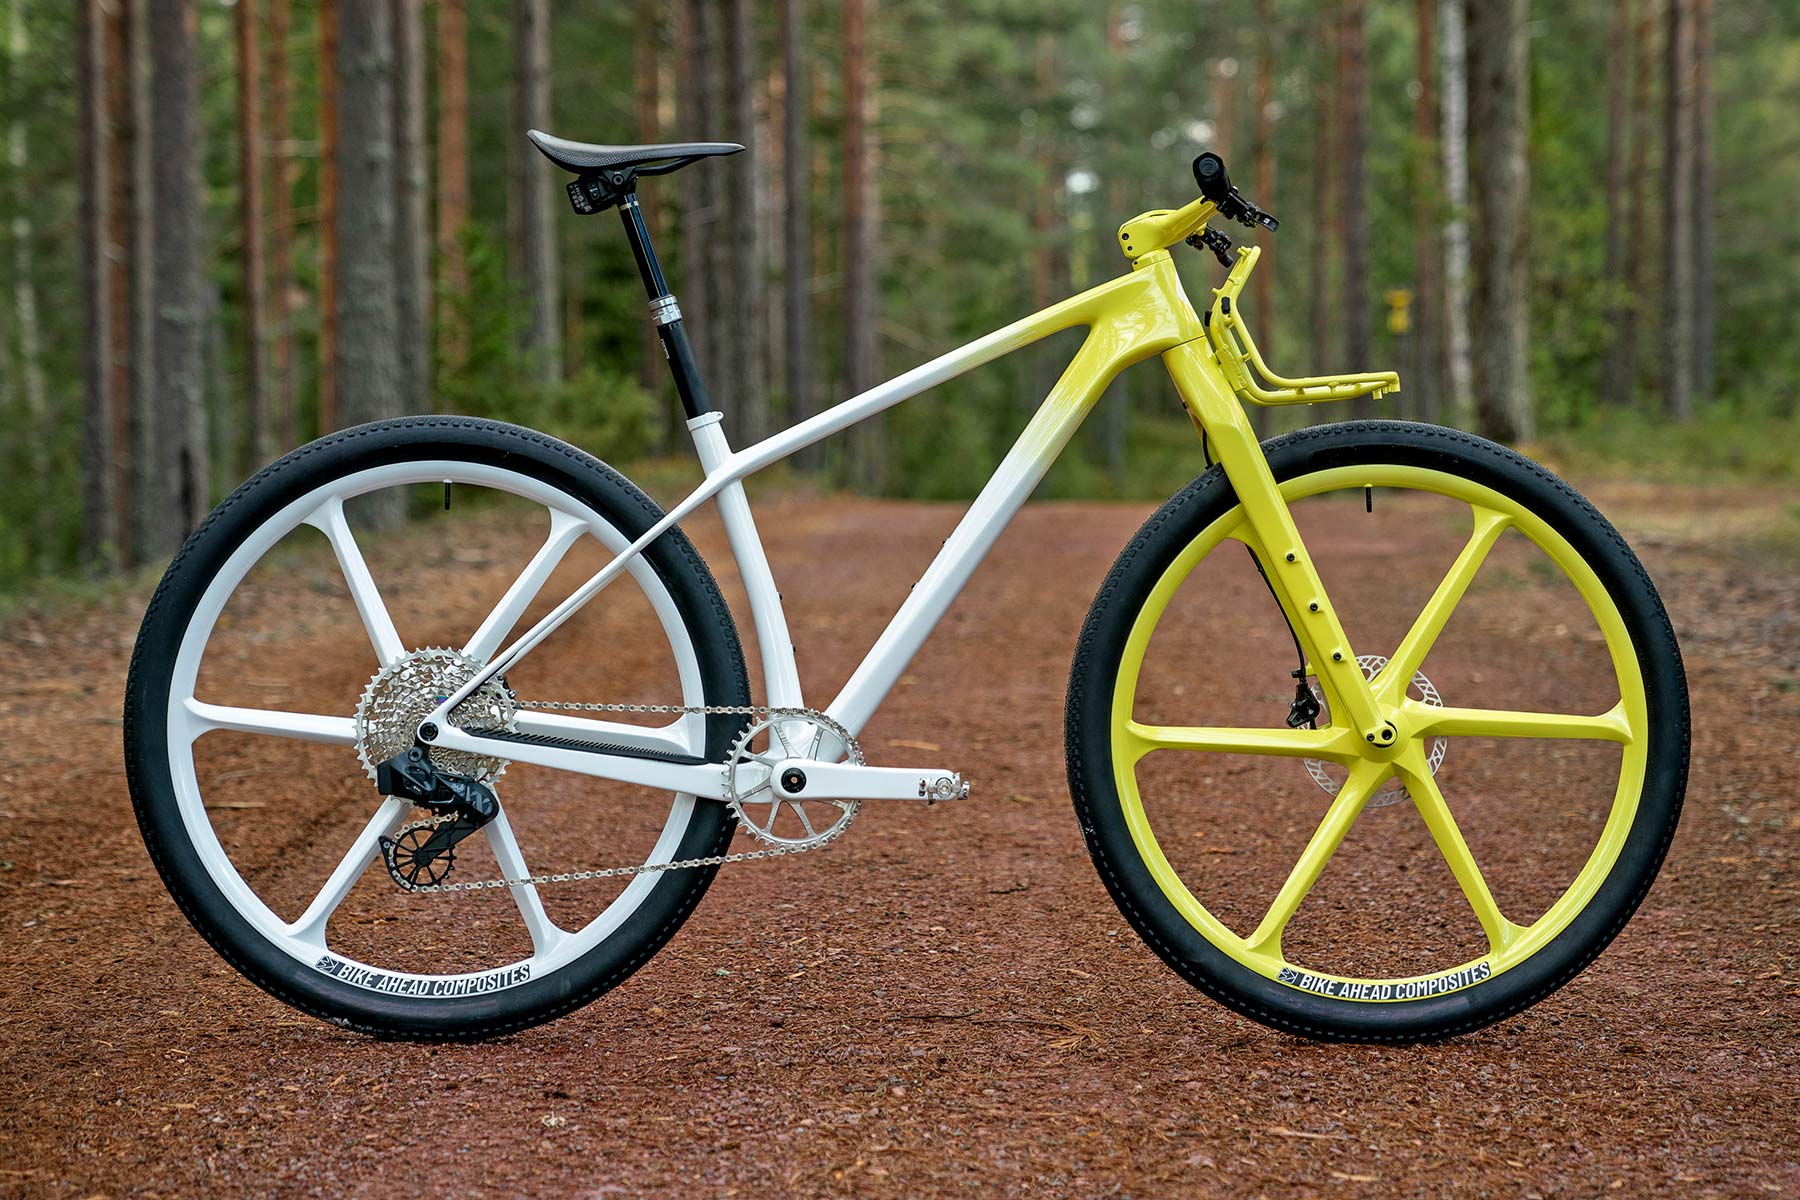 https://bikerumor.com/wp-content/uploads/2021/07/Dangerholm-mellow-yellow-Scott-Scale-Gravel-custom-project-bike_Gustav-Gullholm-dream-bike-builder_photo-by-Andreas-Timfalt_complete.jpg